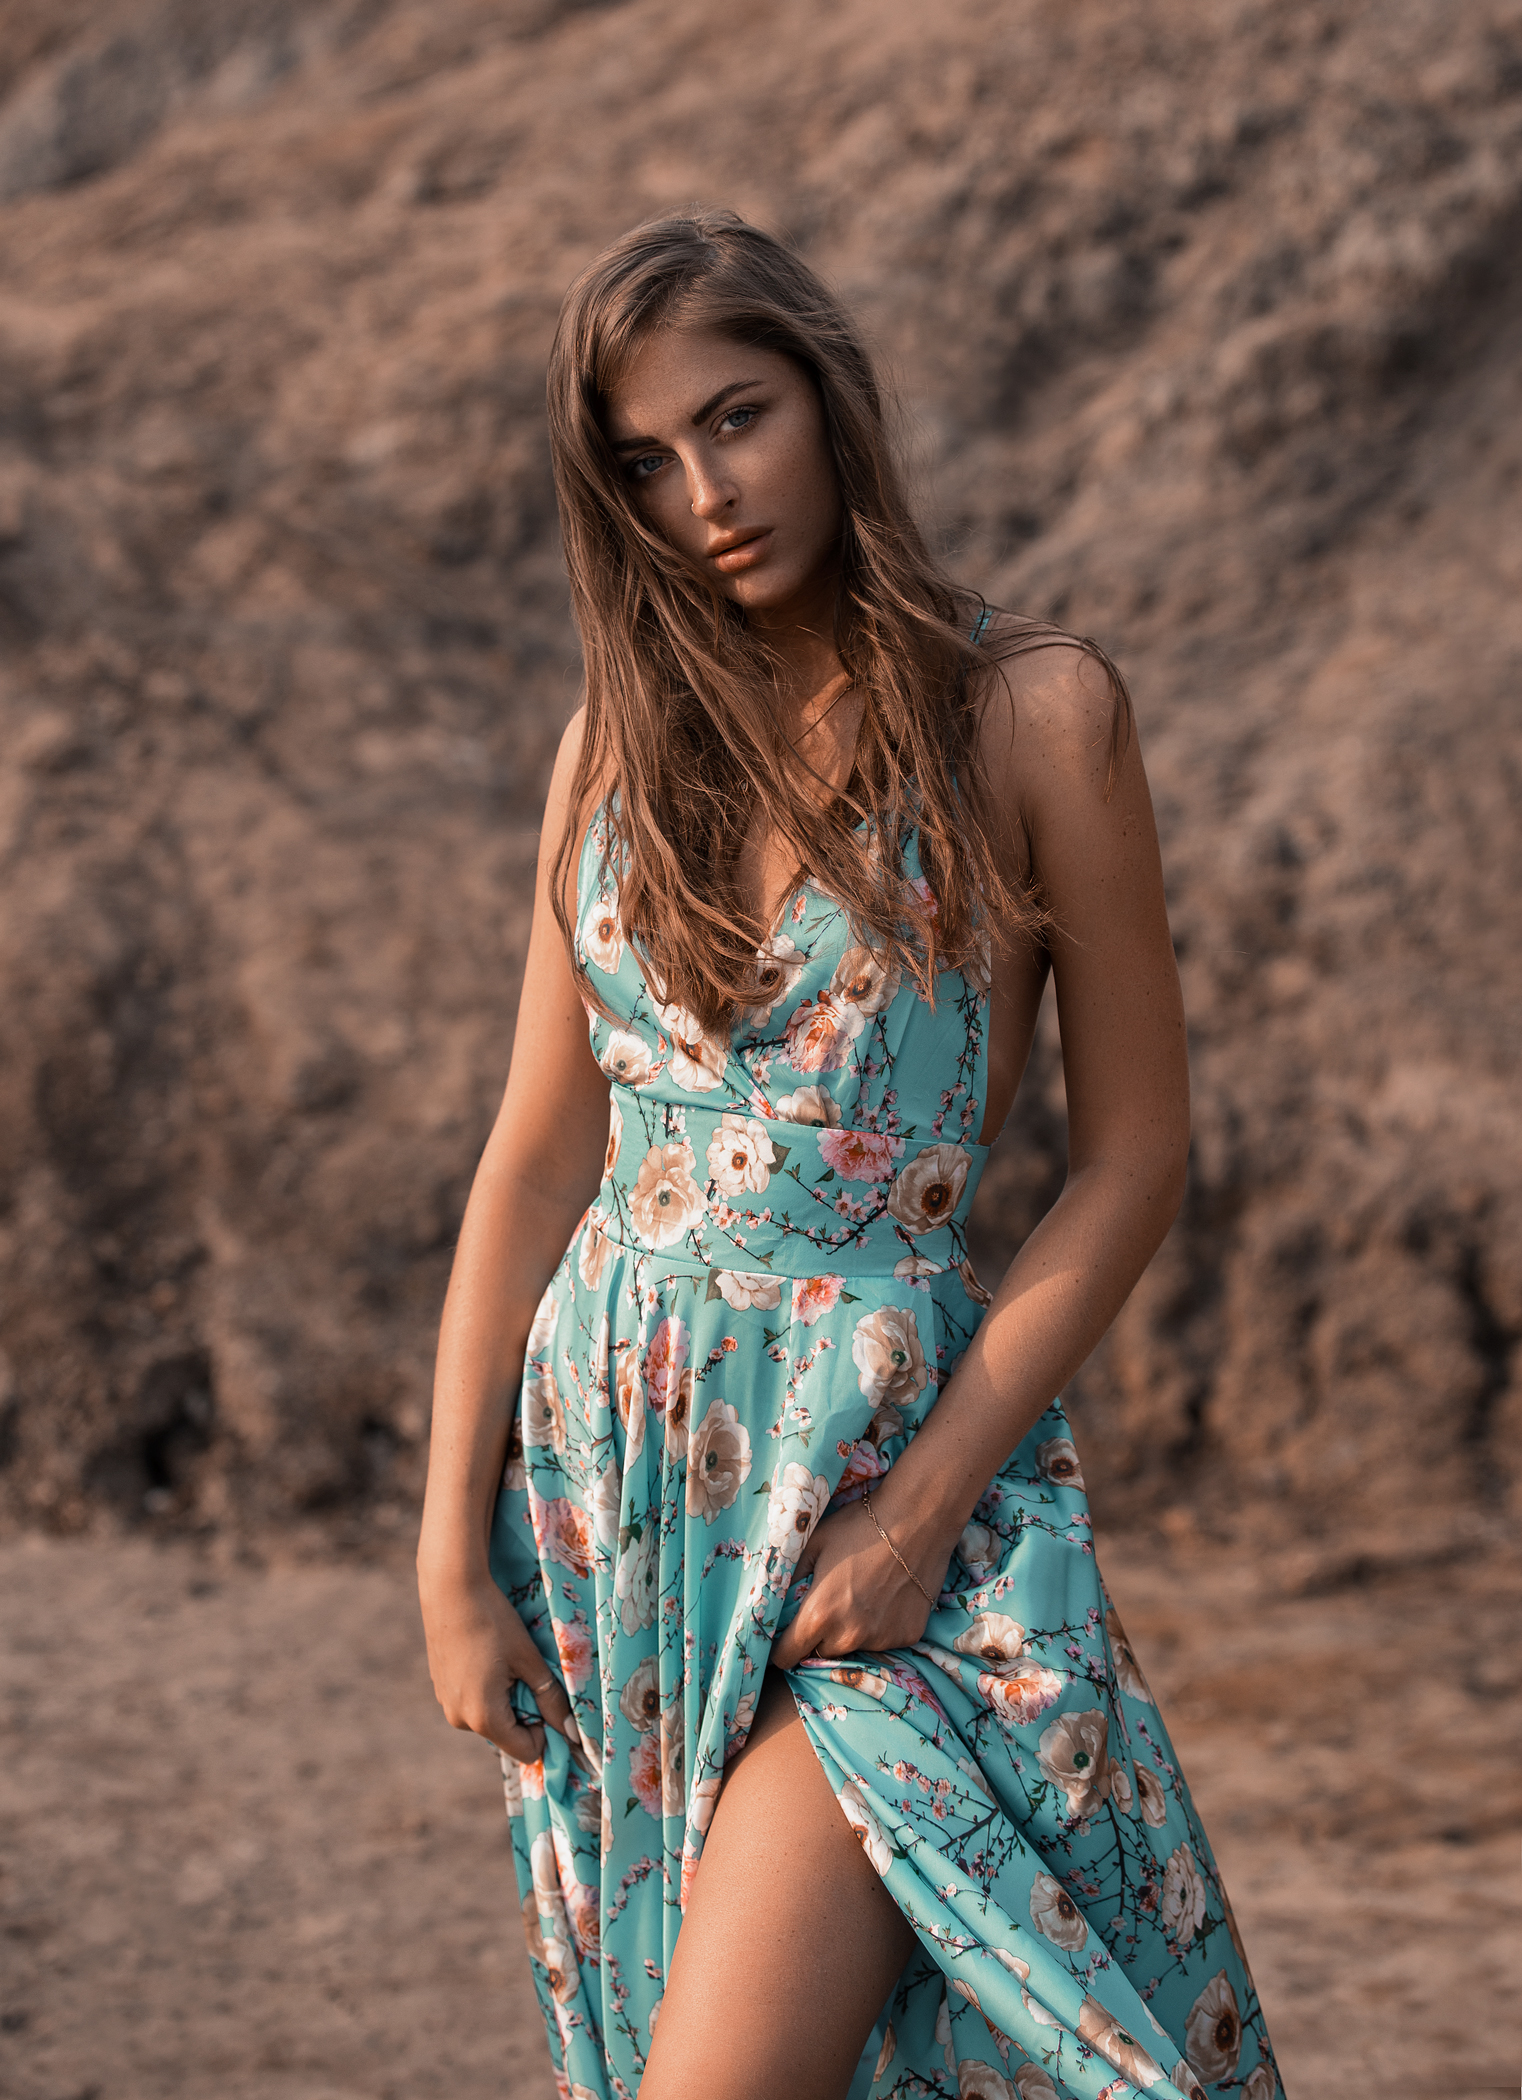 Ilya Baranov Brunette Portrait Display Model Women Outdoors Dress Looking At Viewer Women Sunlight B 1522x2100